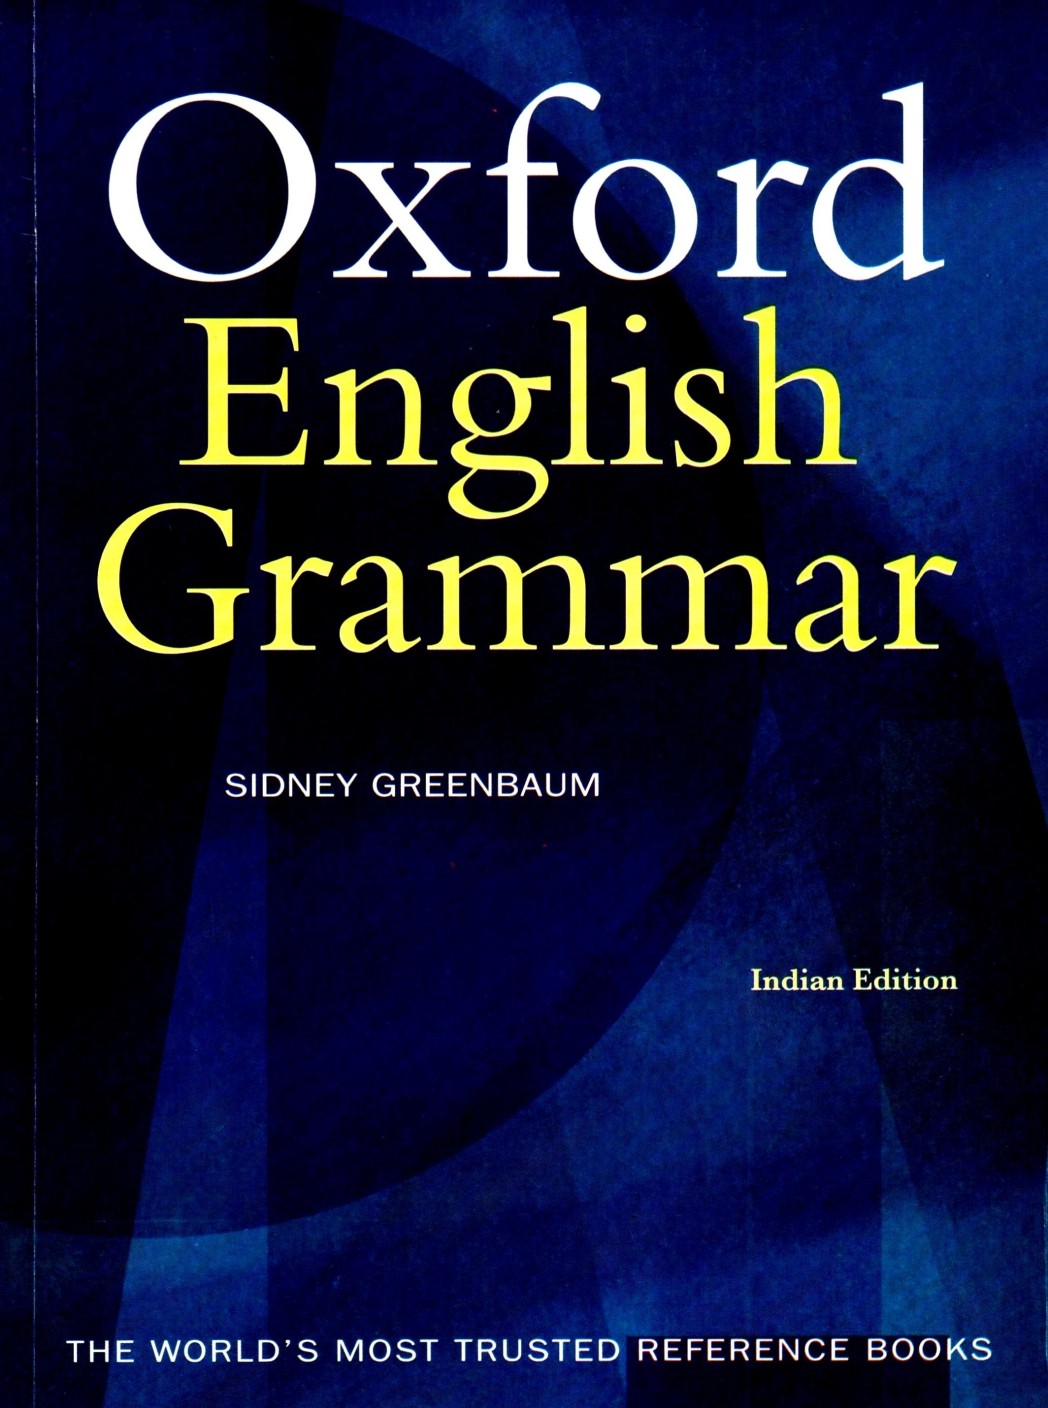 Oxford english grammar pdf free